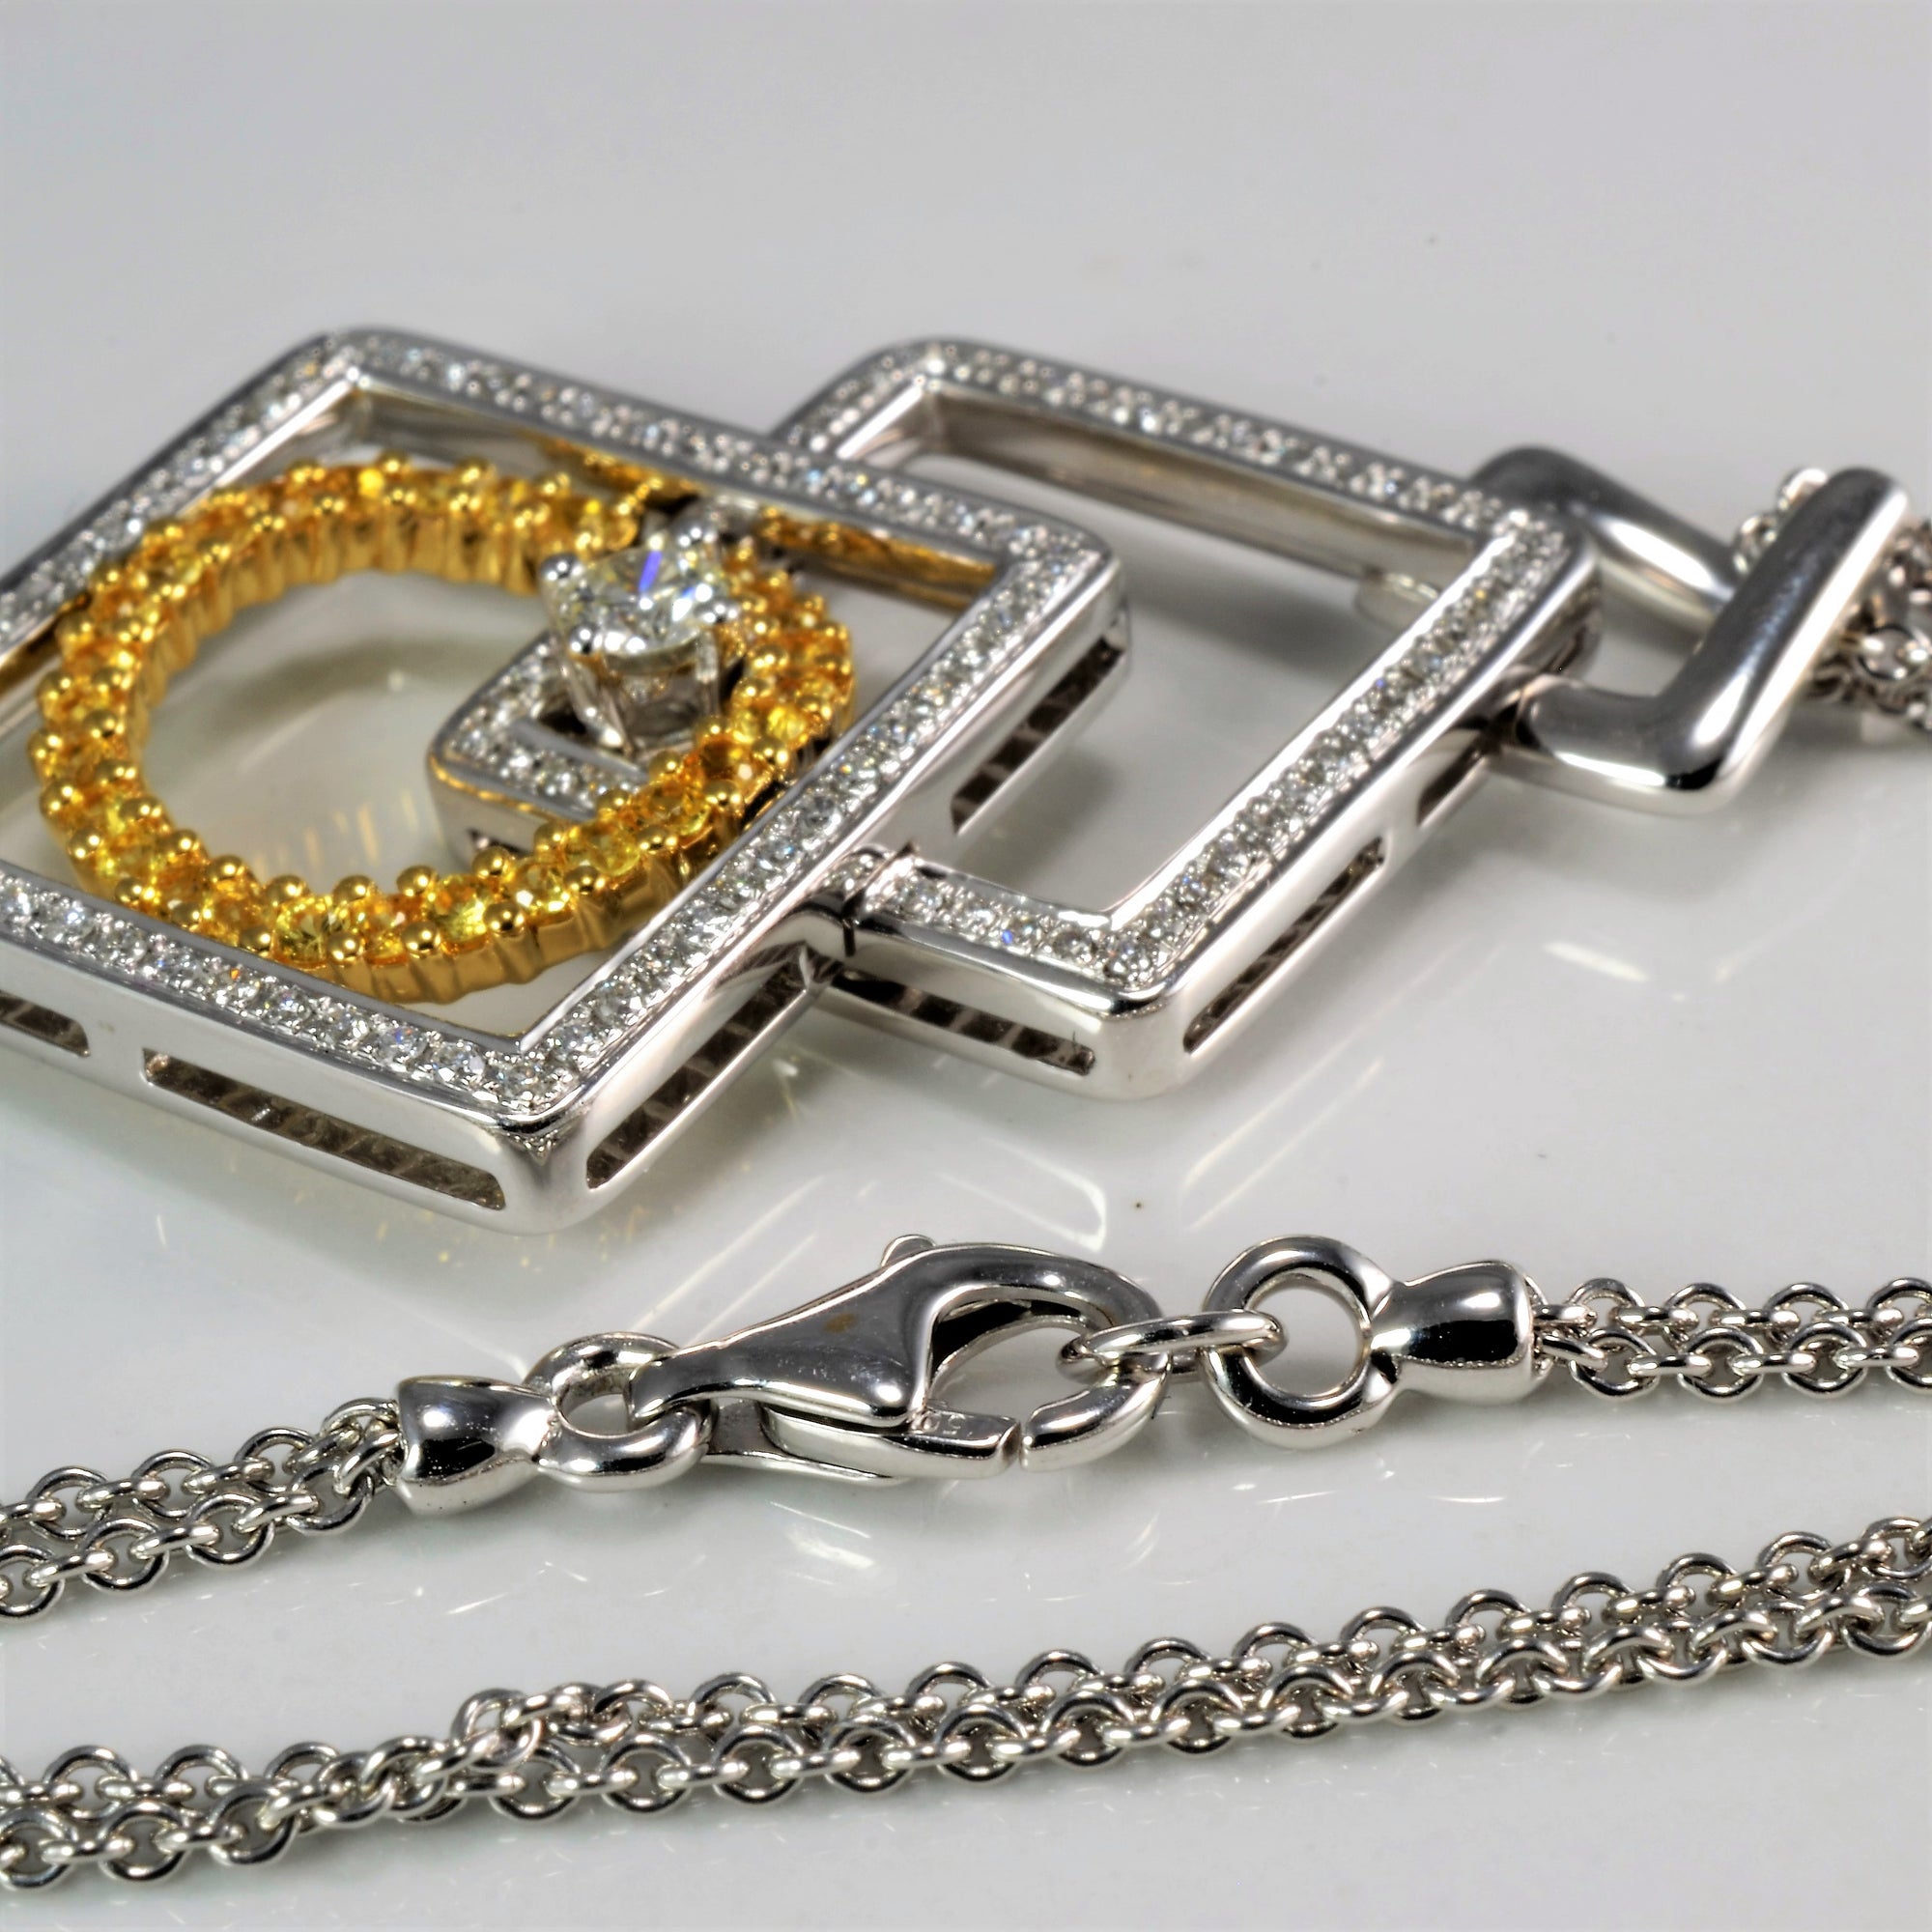 Textured Pave Diamond & Sapphire Pendant Necklace | 0.35 ctw, 18''|